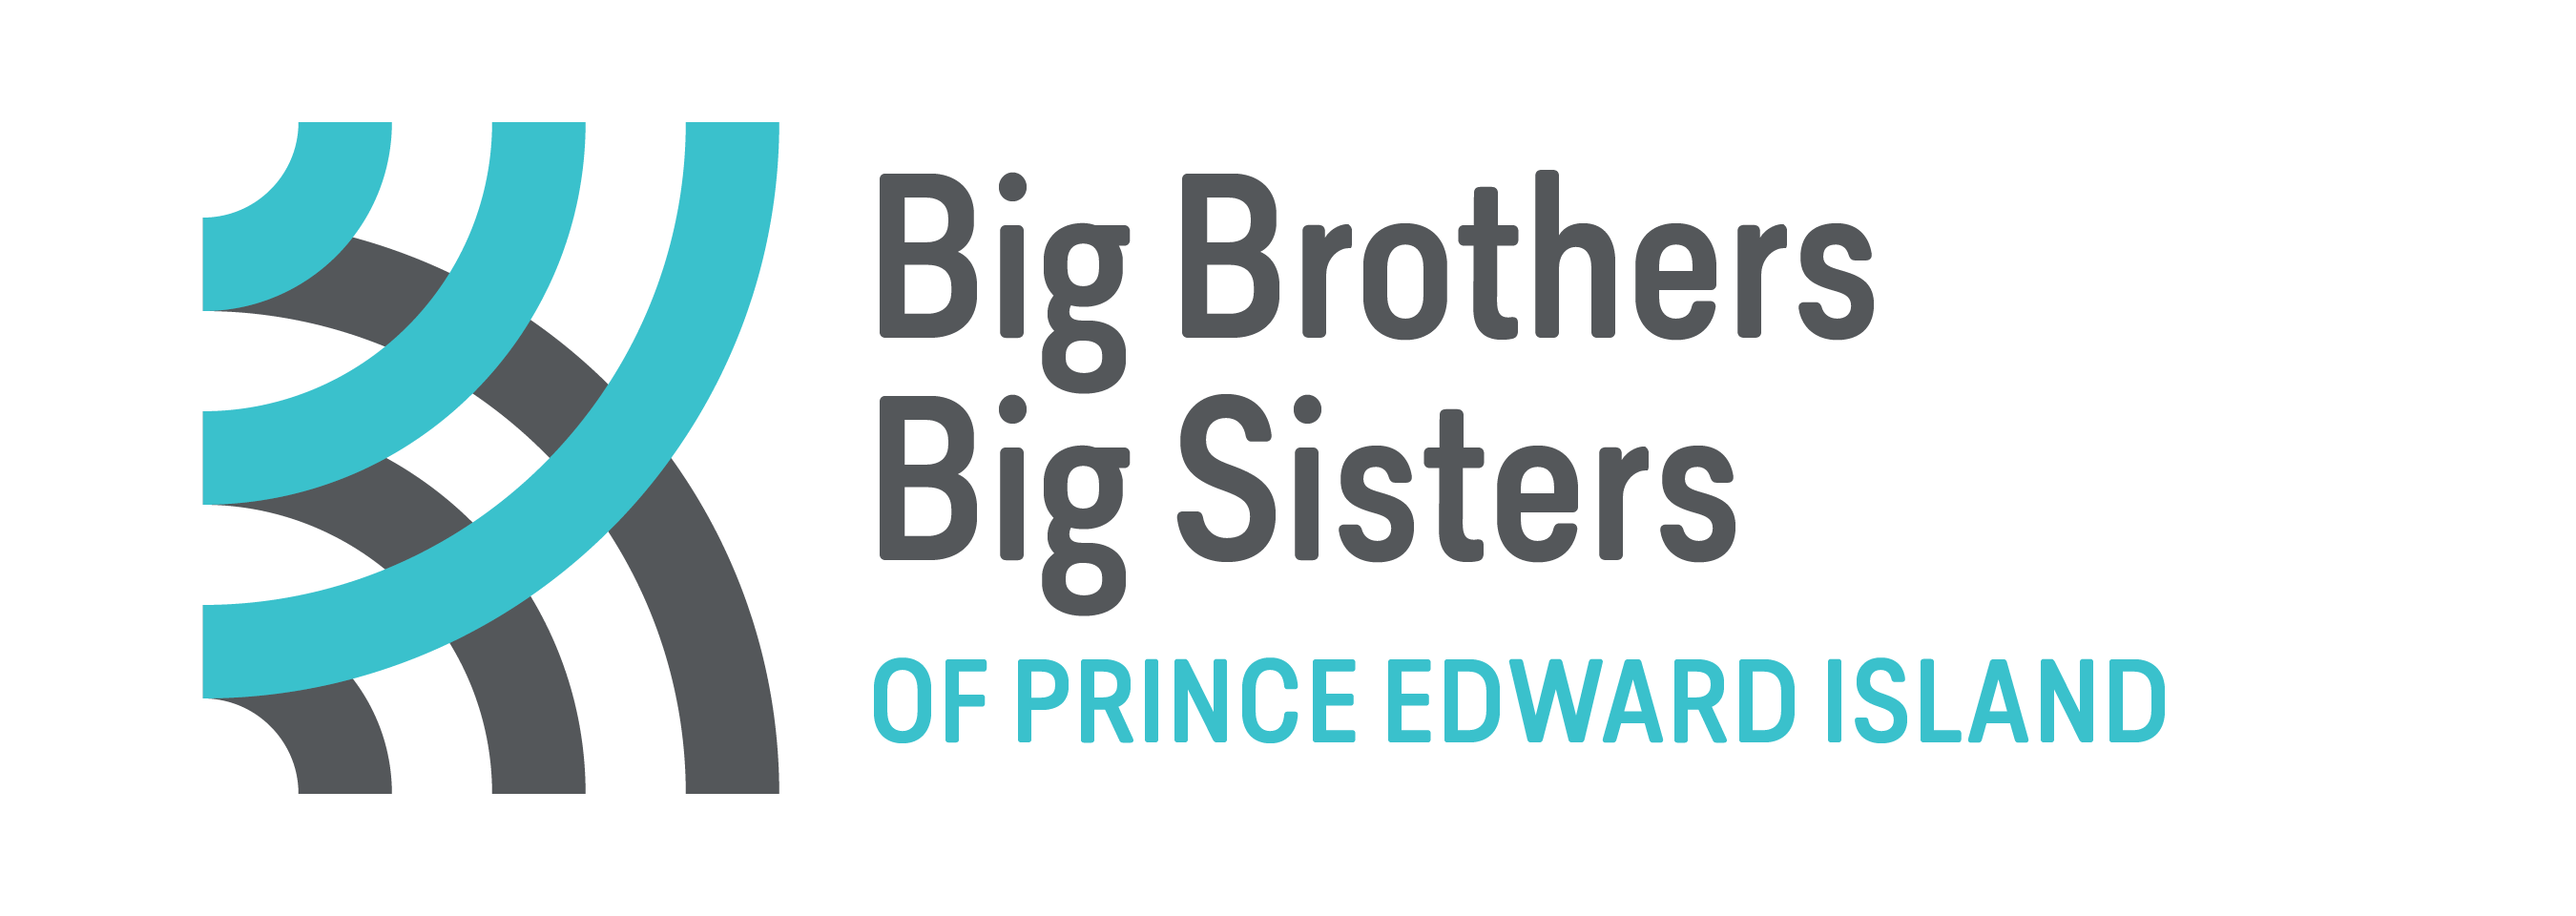 Big Brothers Big Sisters of Prince Edward Island logo